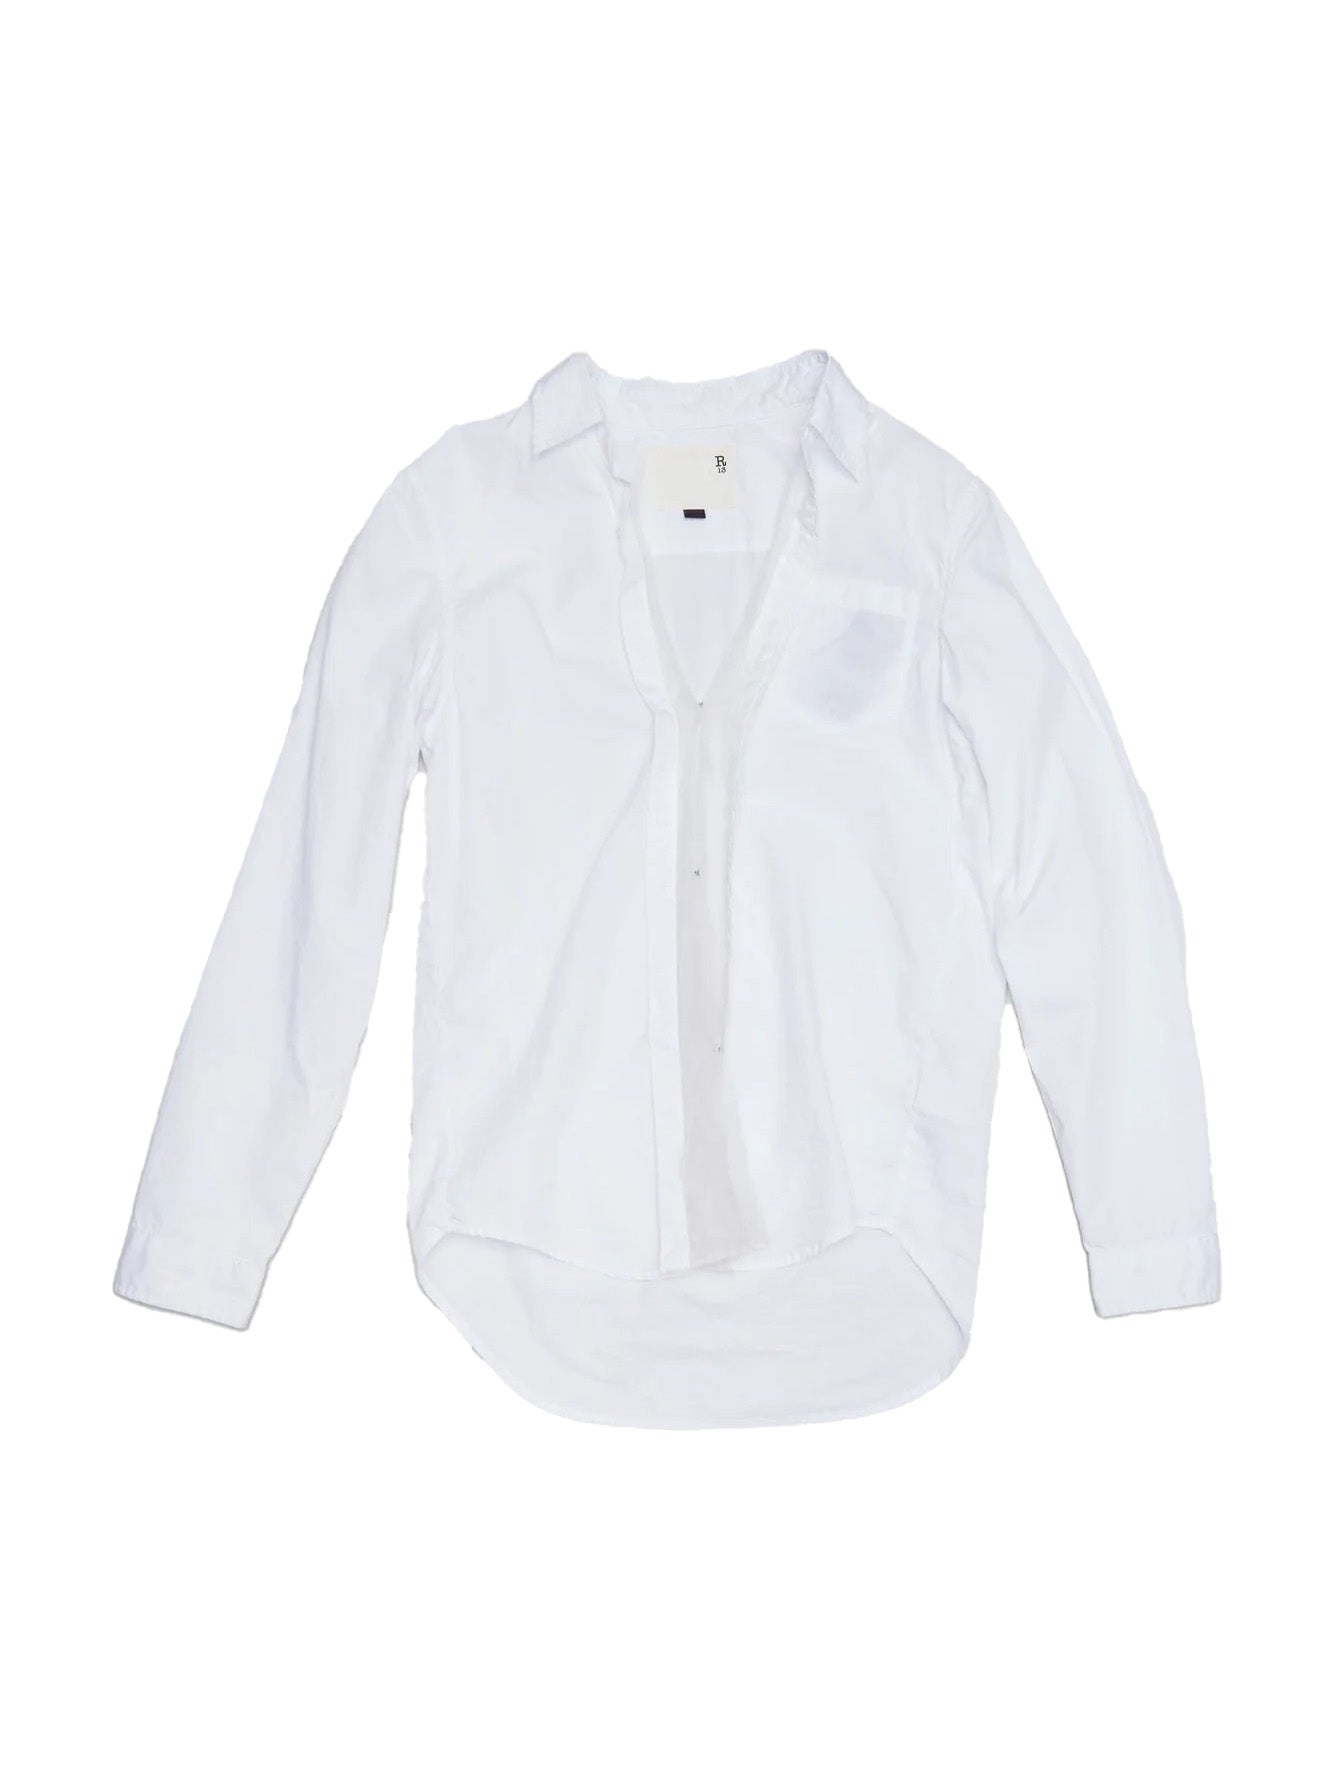 Foldout Shirt in White